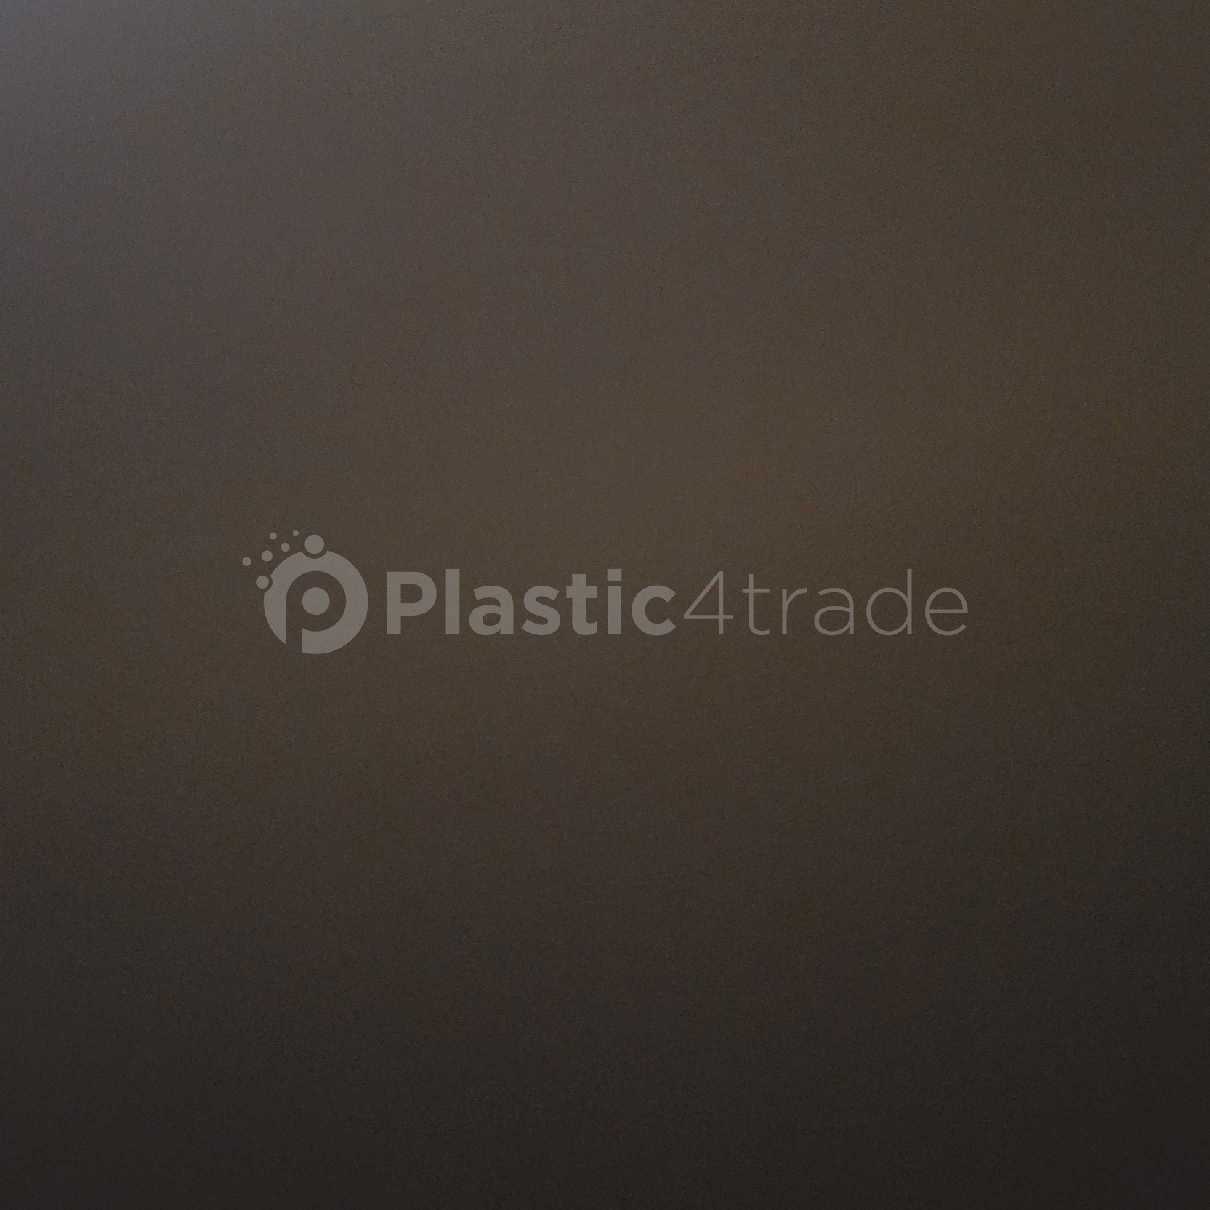 HDPE GRANULES HDPE Flacks Extrusion india Plastic4trade